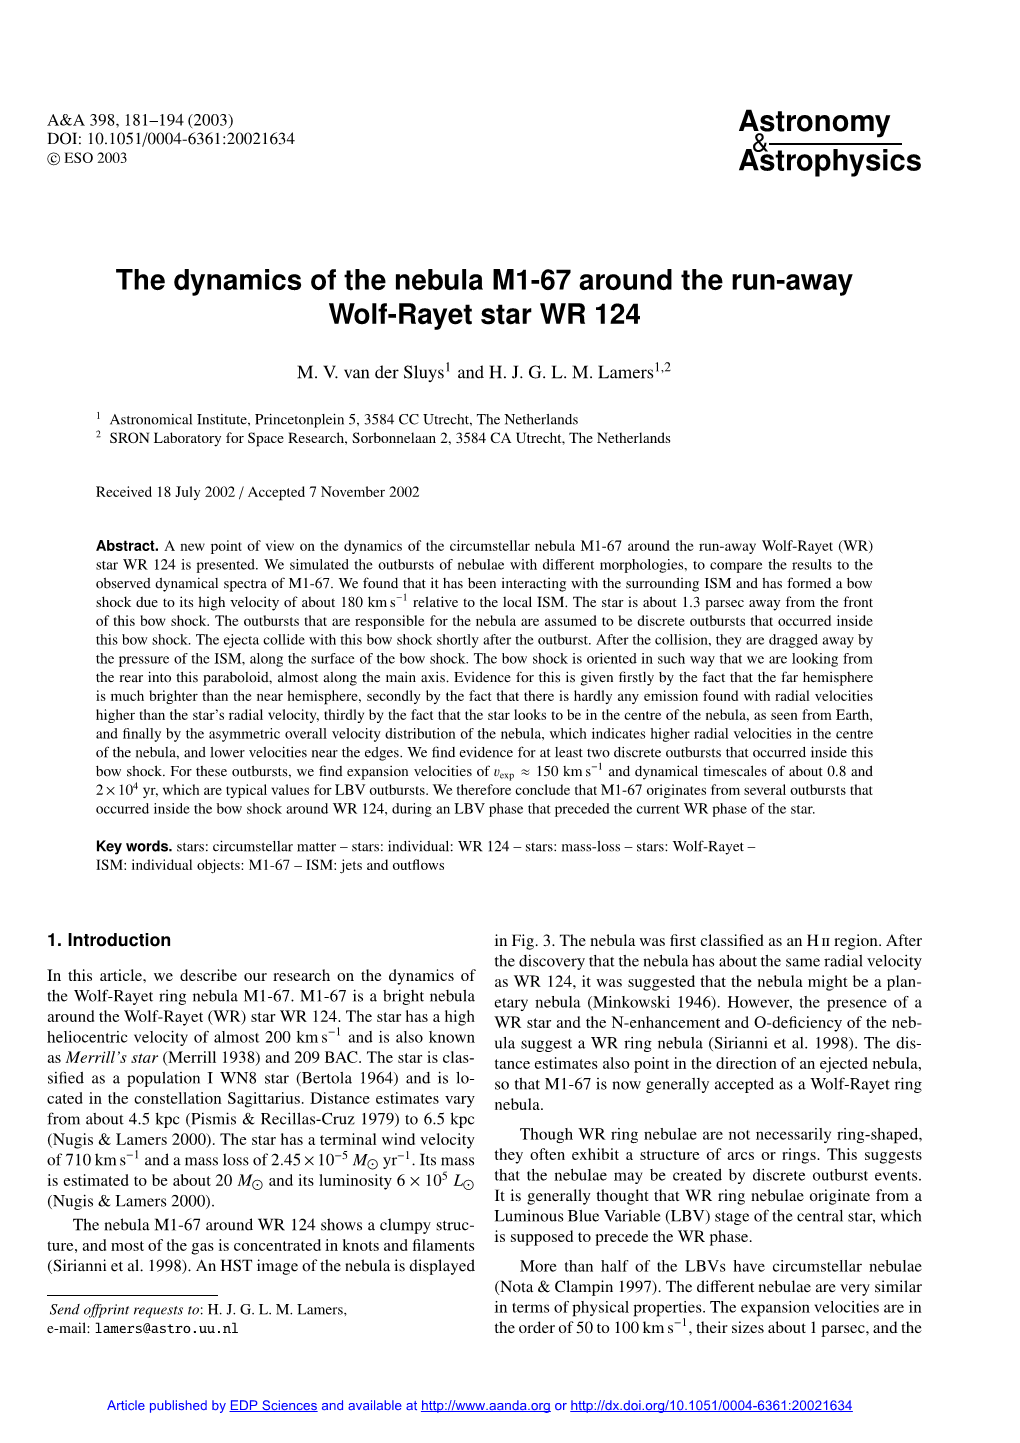 The Dynamics of the Nebula M1-67 Around the Run-Away Wolf-Rayet Star WR 124